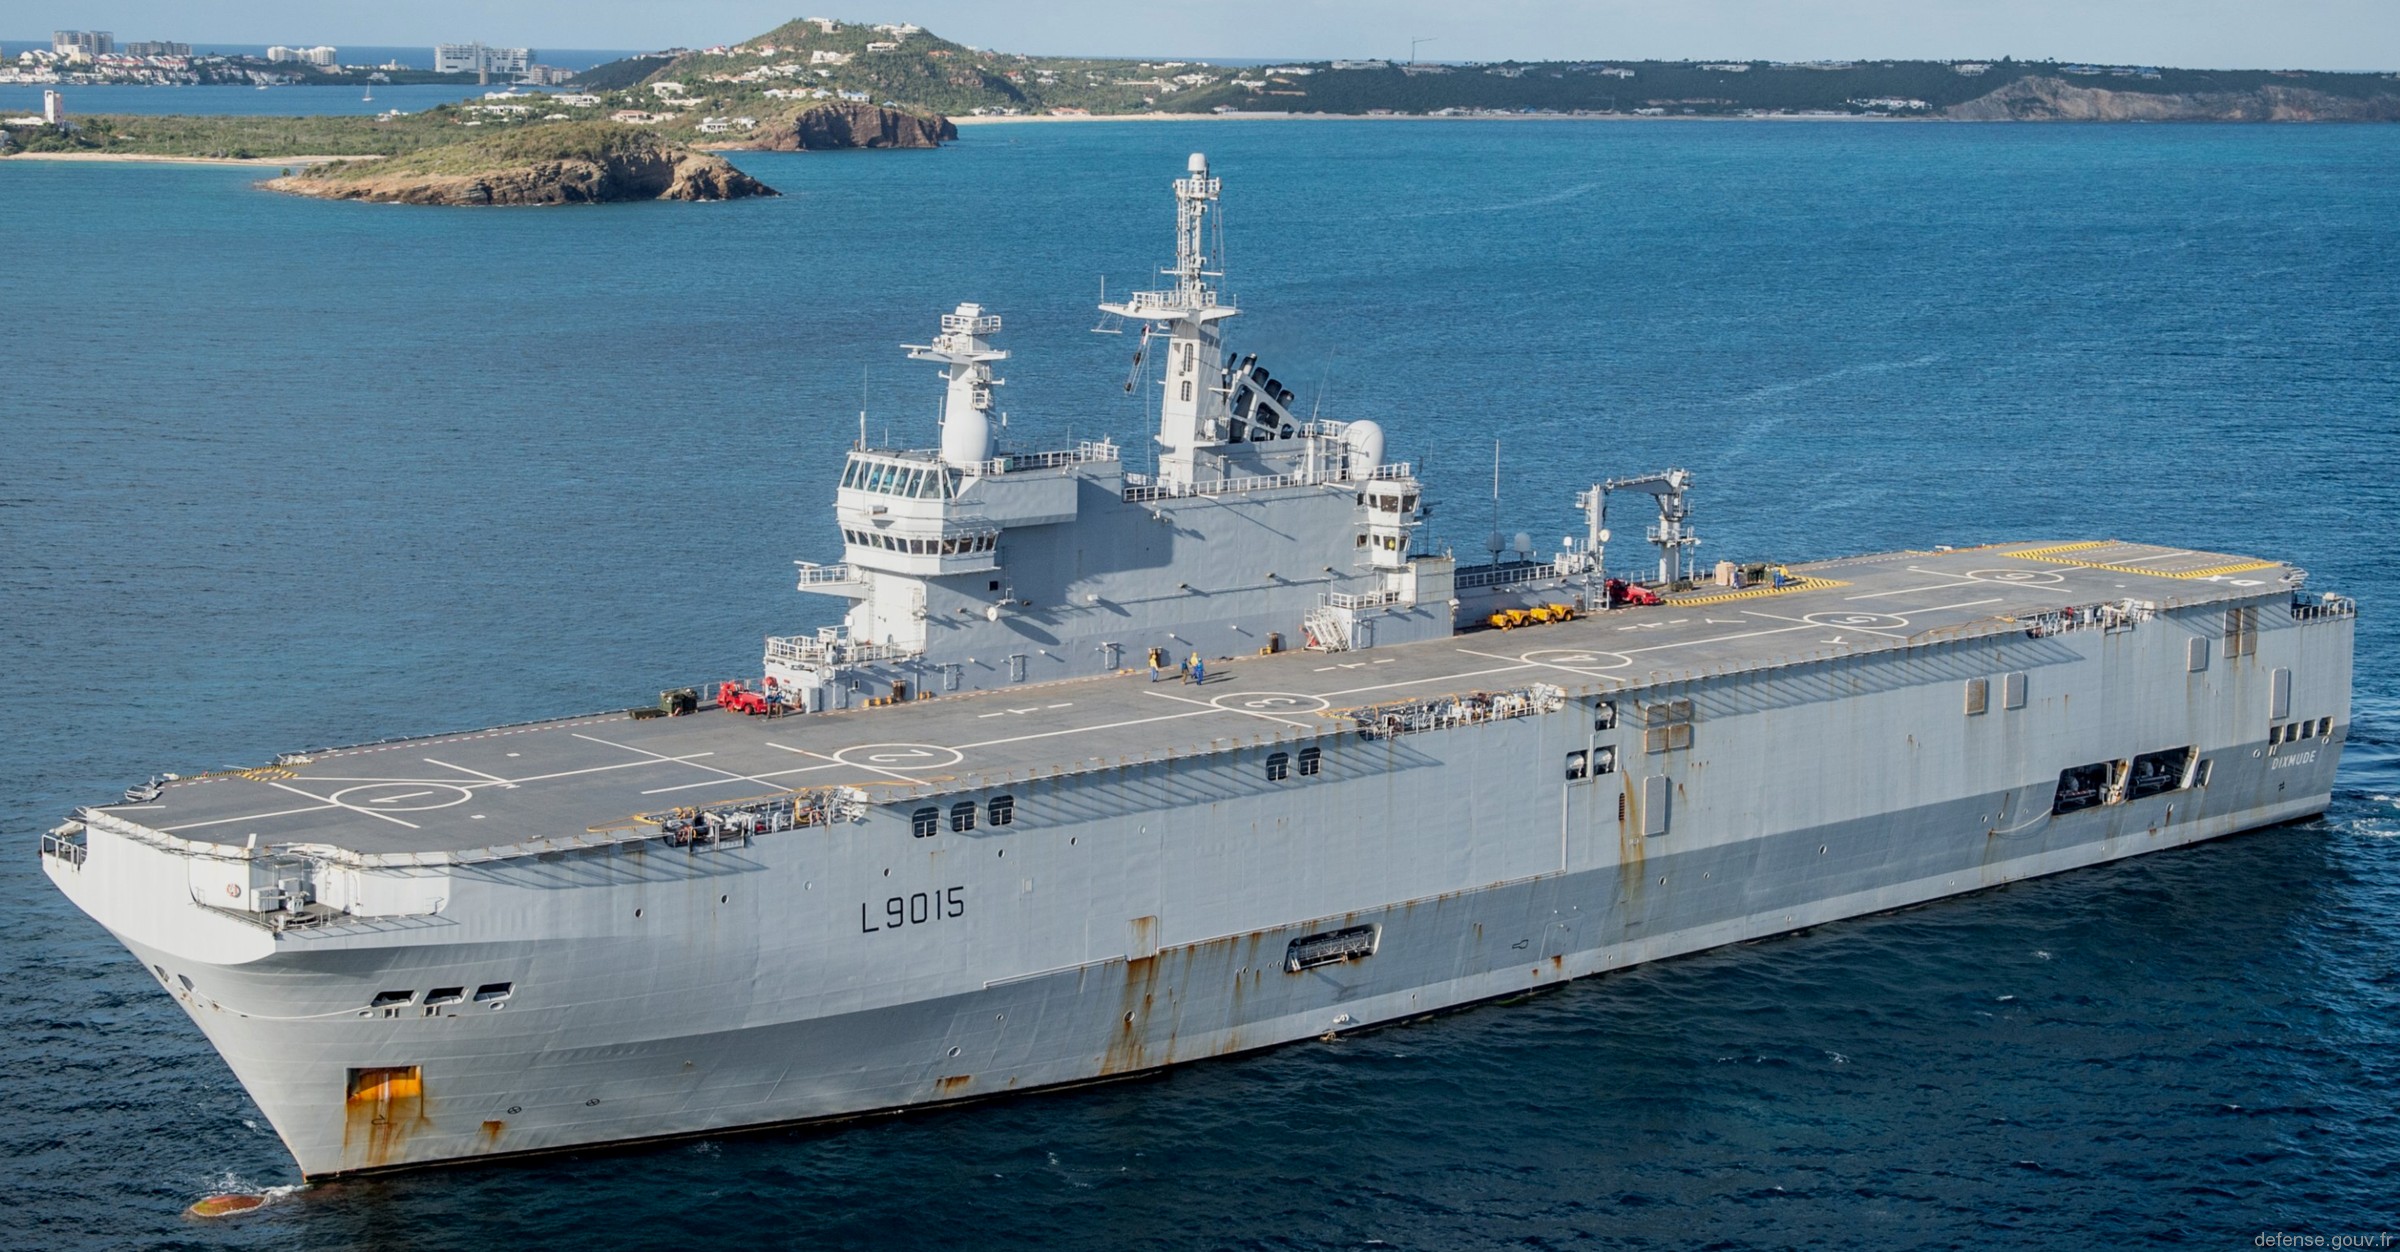 l-9015 fs dixmude mistral class amphibious assault command ship french navy marine nationale stx saint nazaire 53x